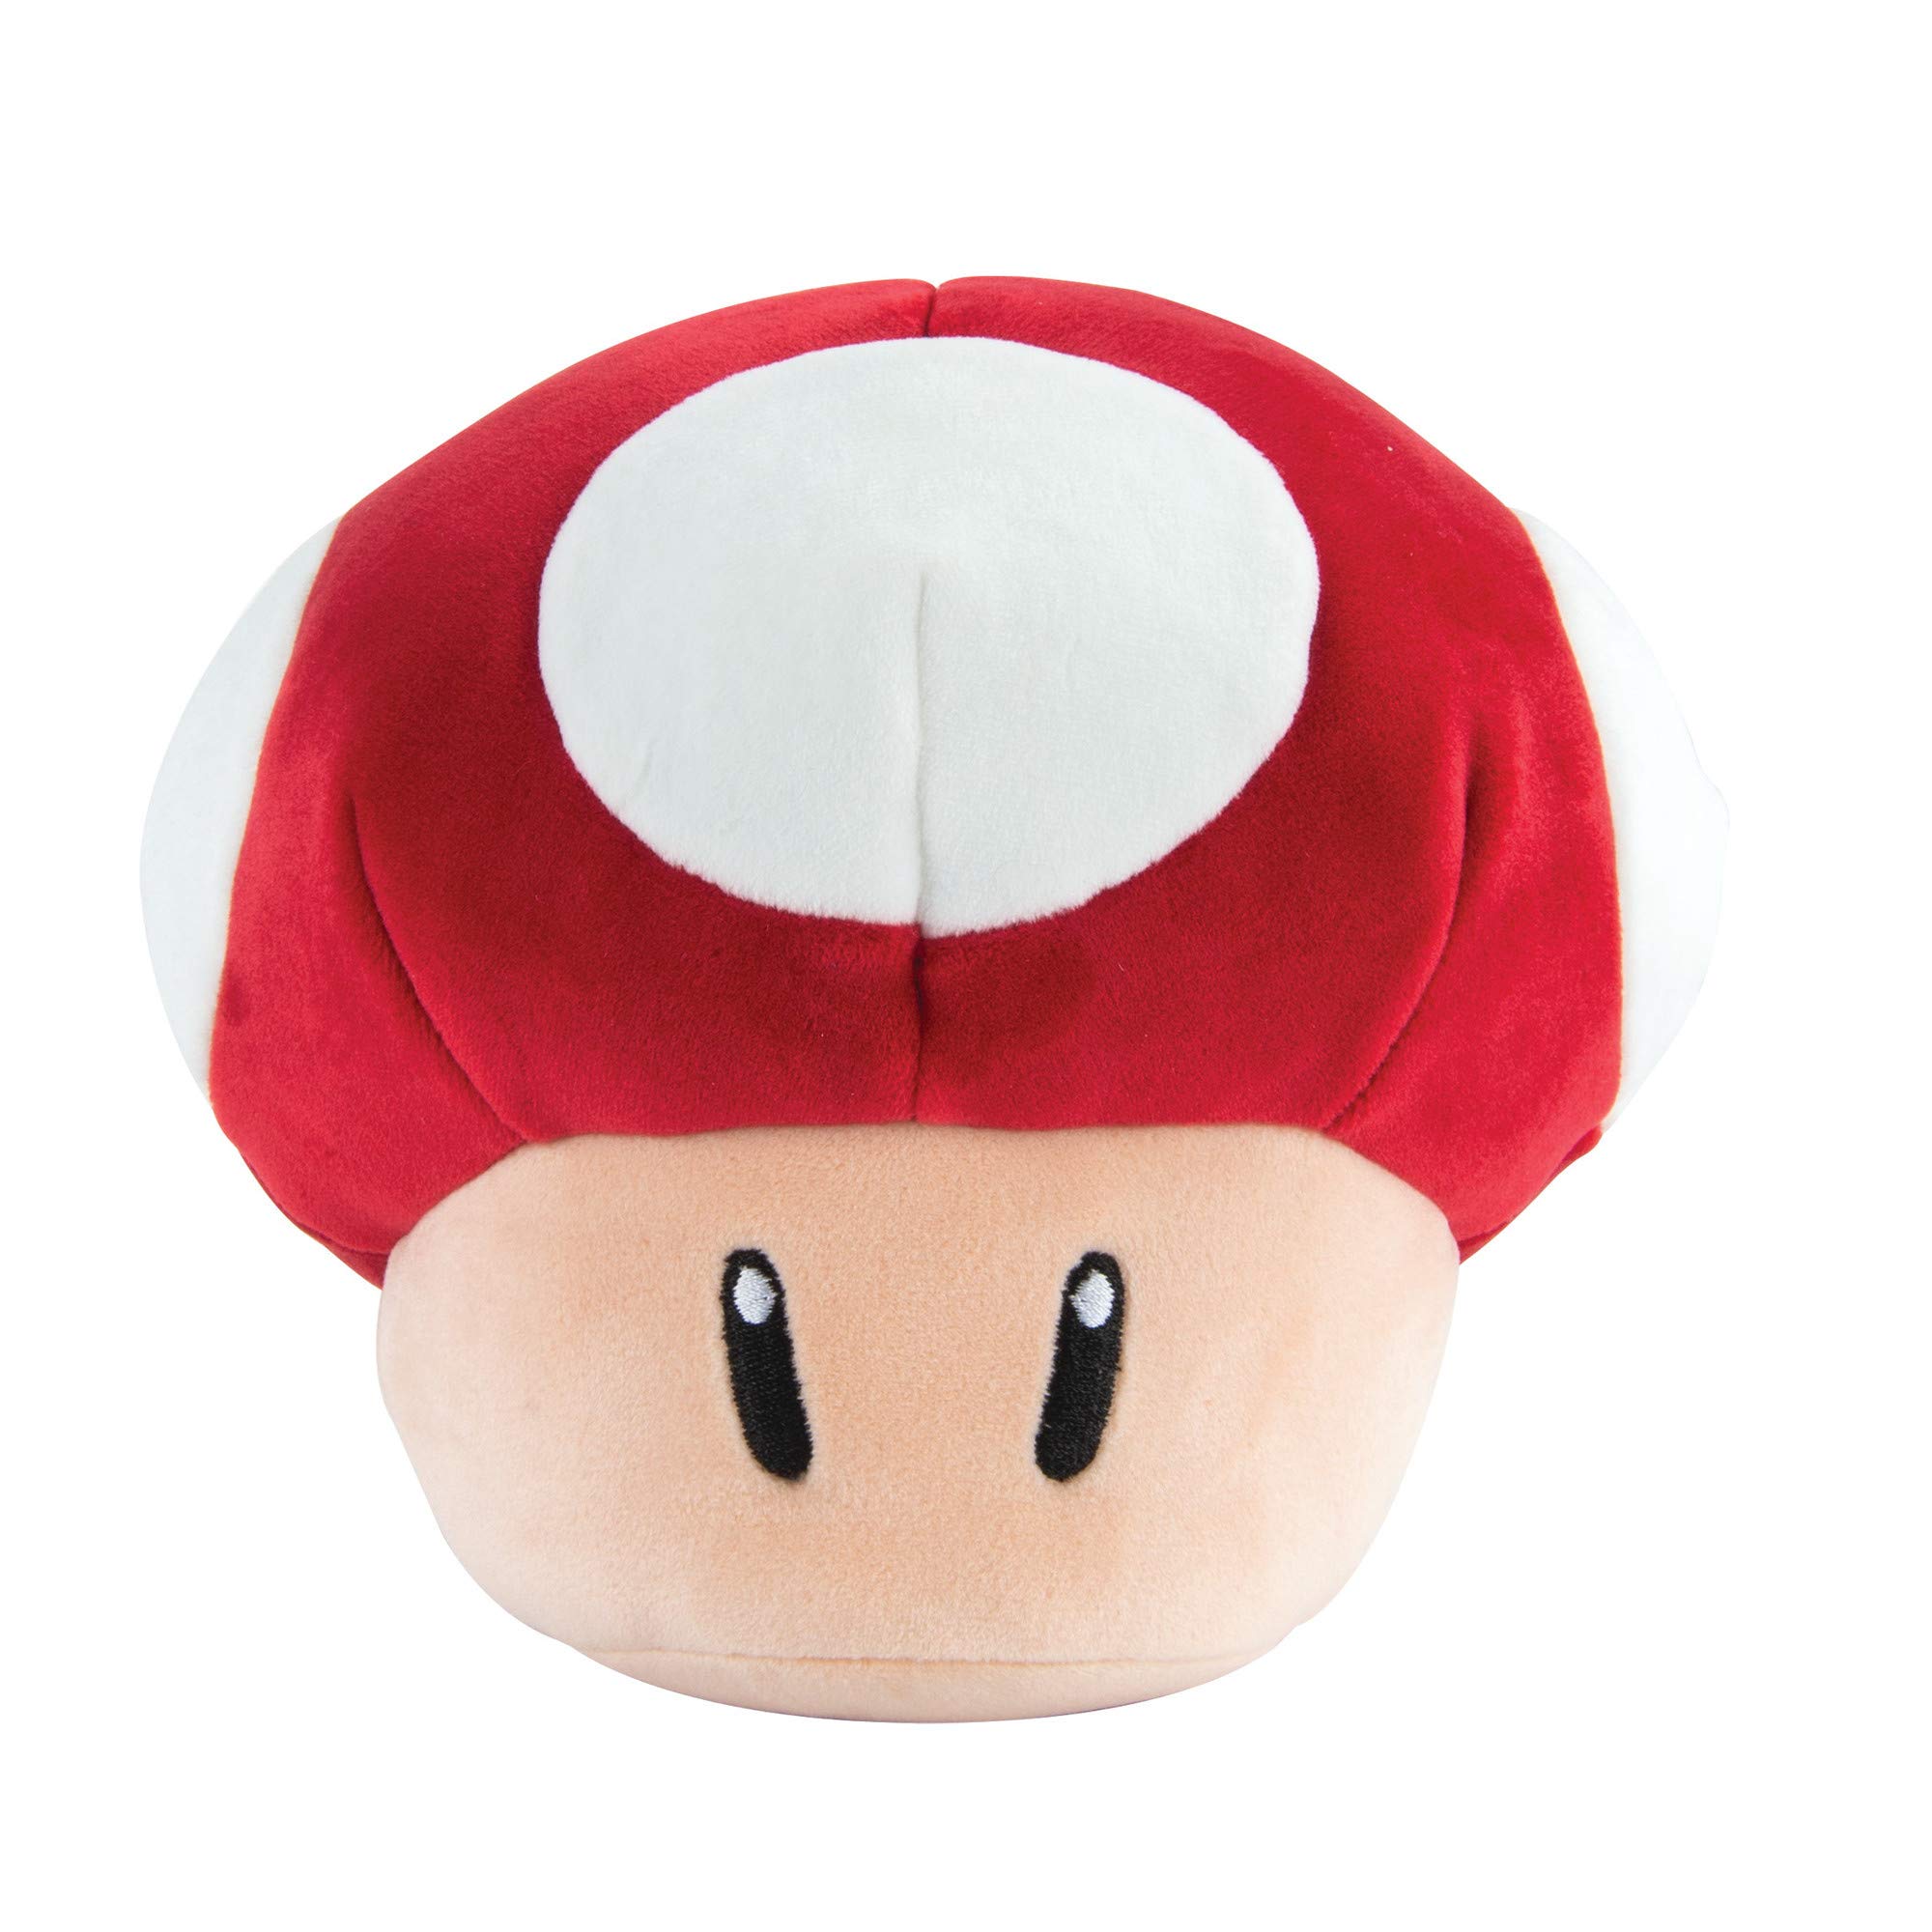 6" Club Mocchi Mocchi Nintendo Super Mario Mushroom Plush $6 + Free Shipping w/ Prime or on $35+